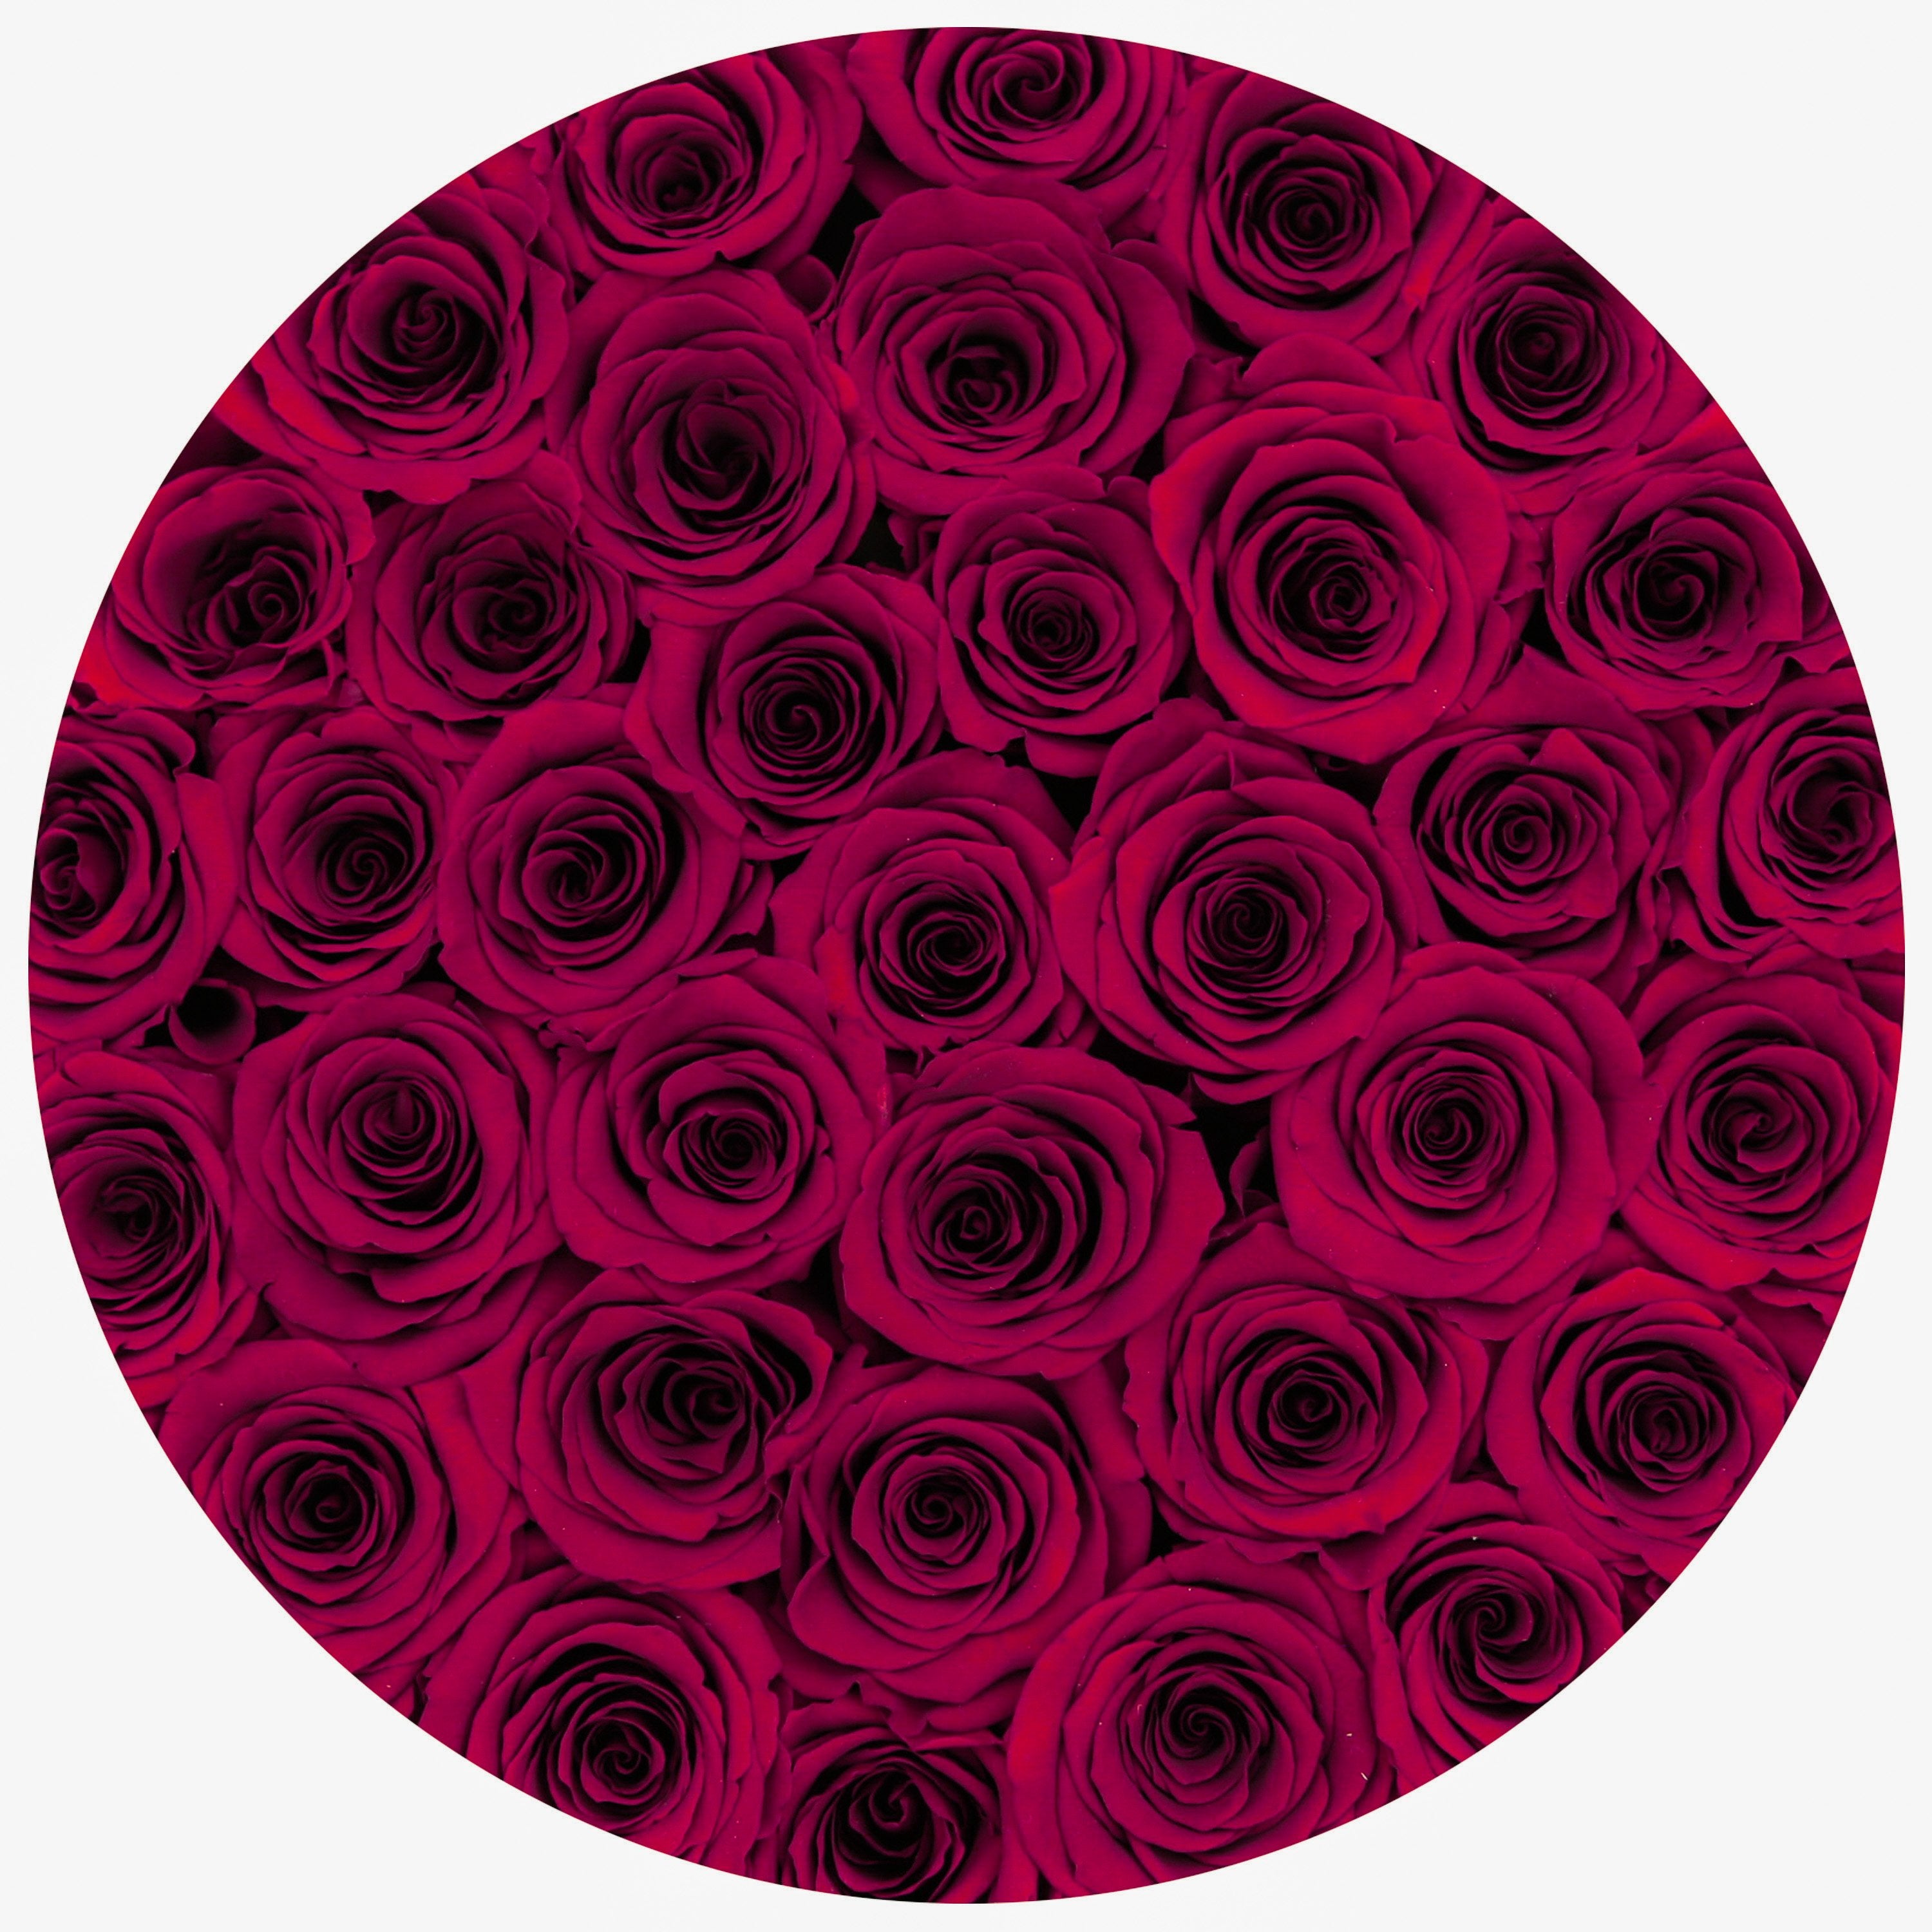 medium round box - black - burgundy roses red eternity roses - the million roses